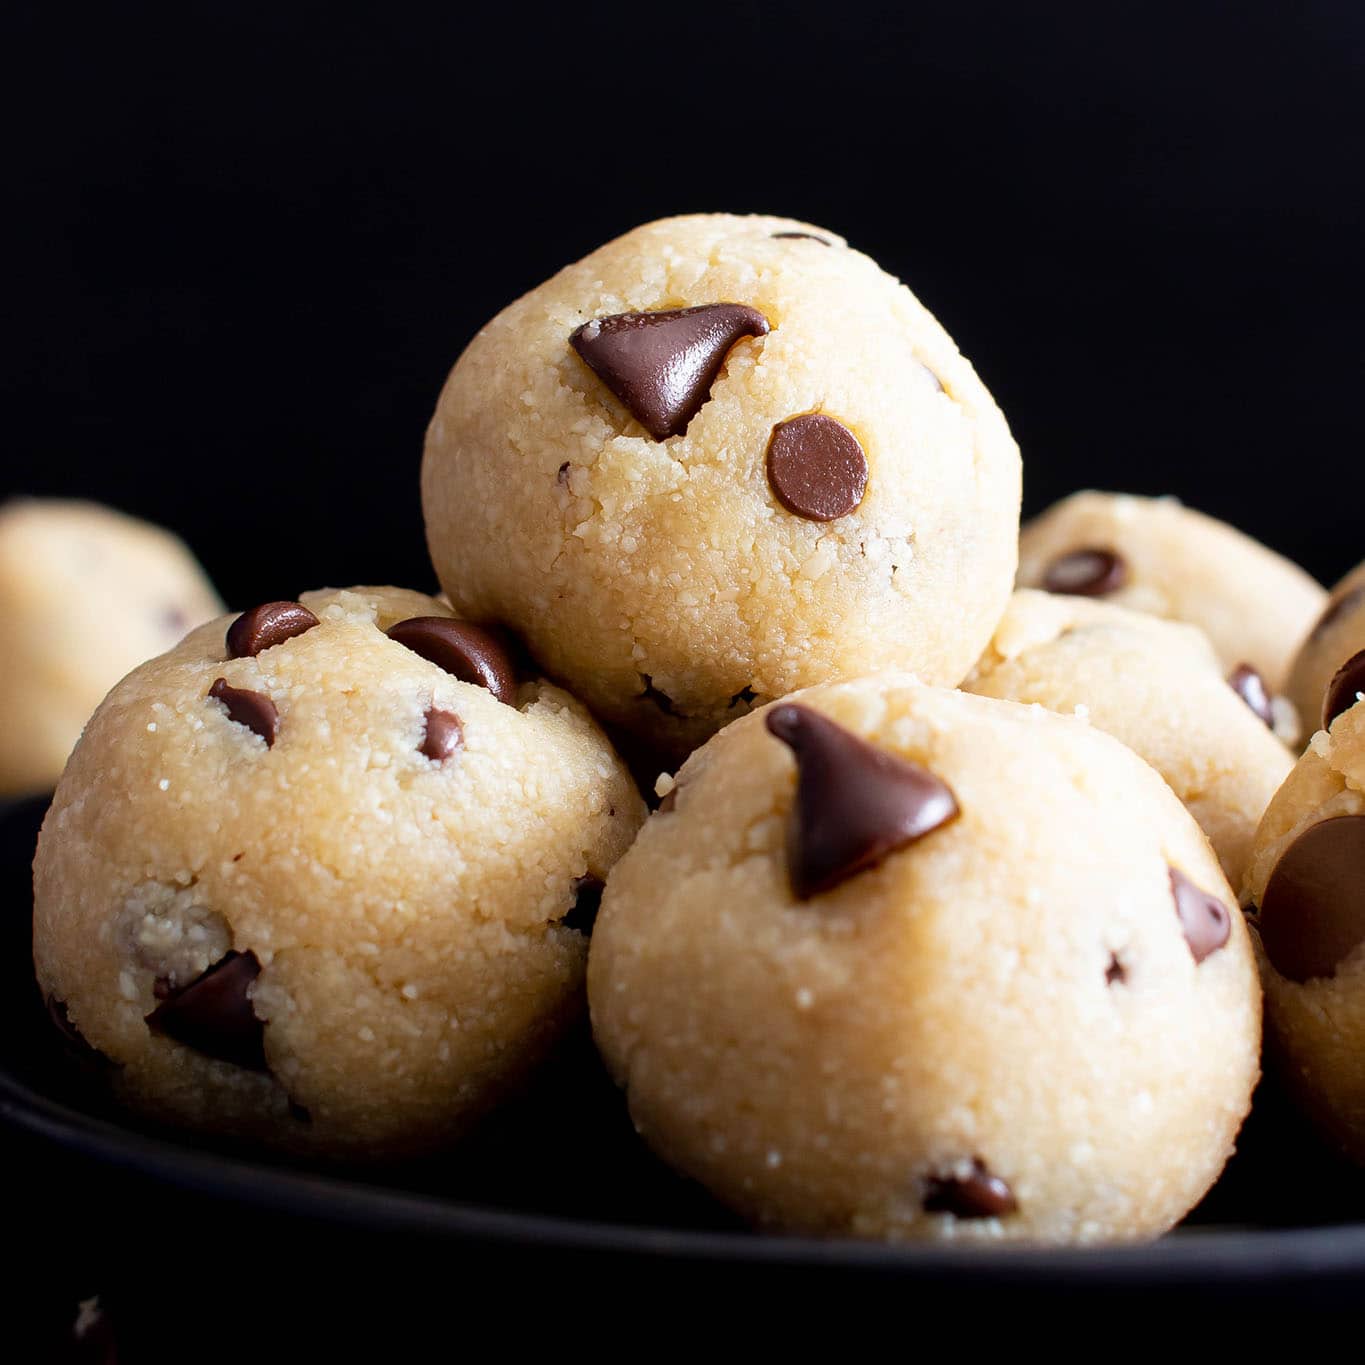 Dark Chocolate Chili Nut Clusters Recipe – Healthy, Homemade & Vegan! -  Beaming Baker